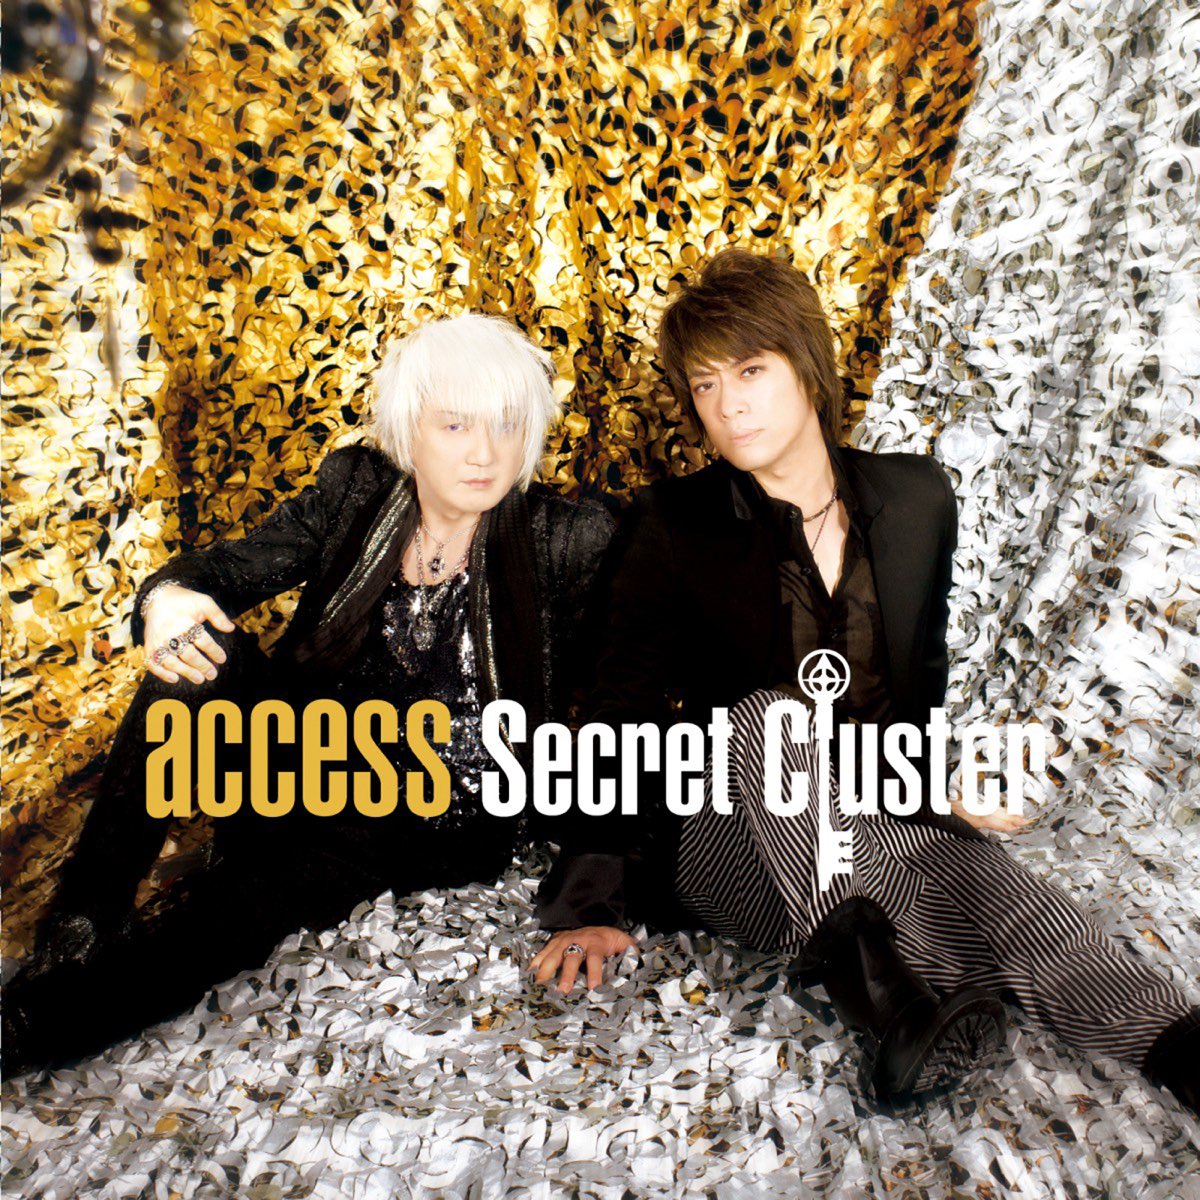 Last access. Secret песня.